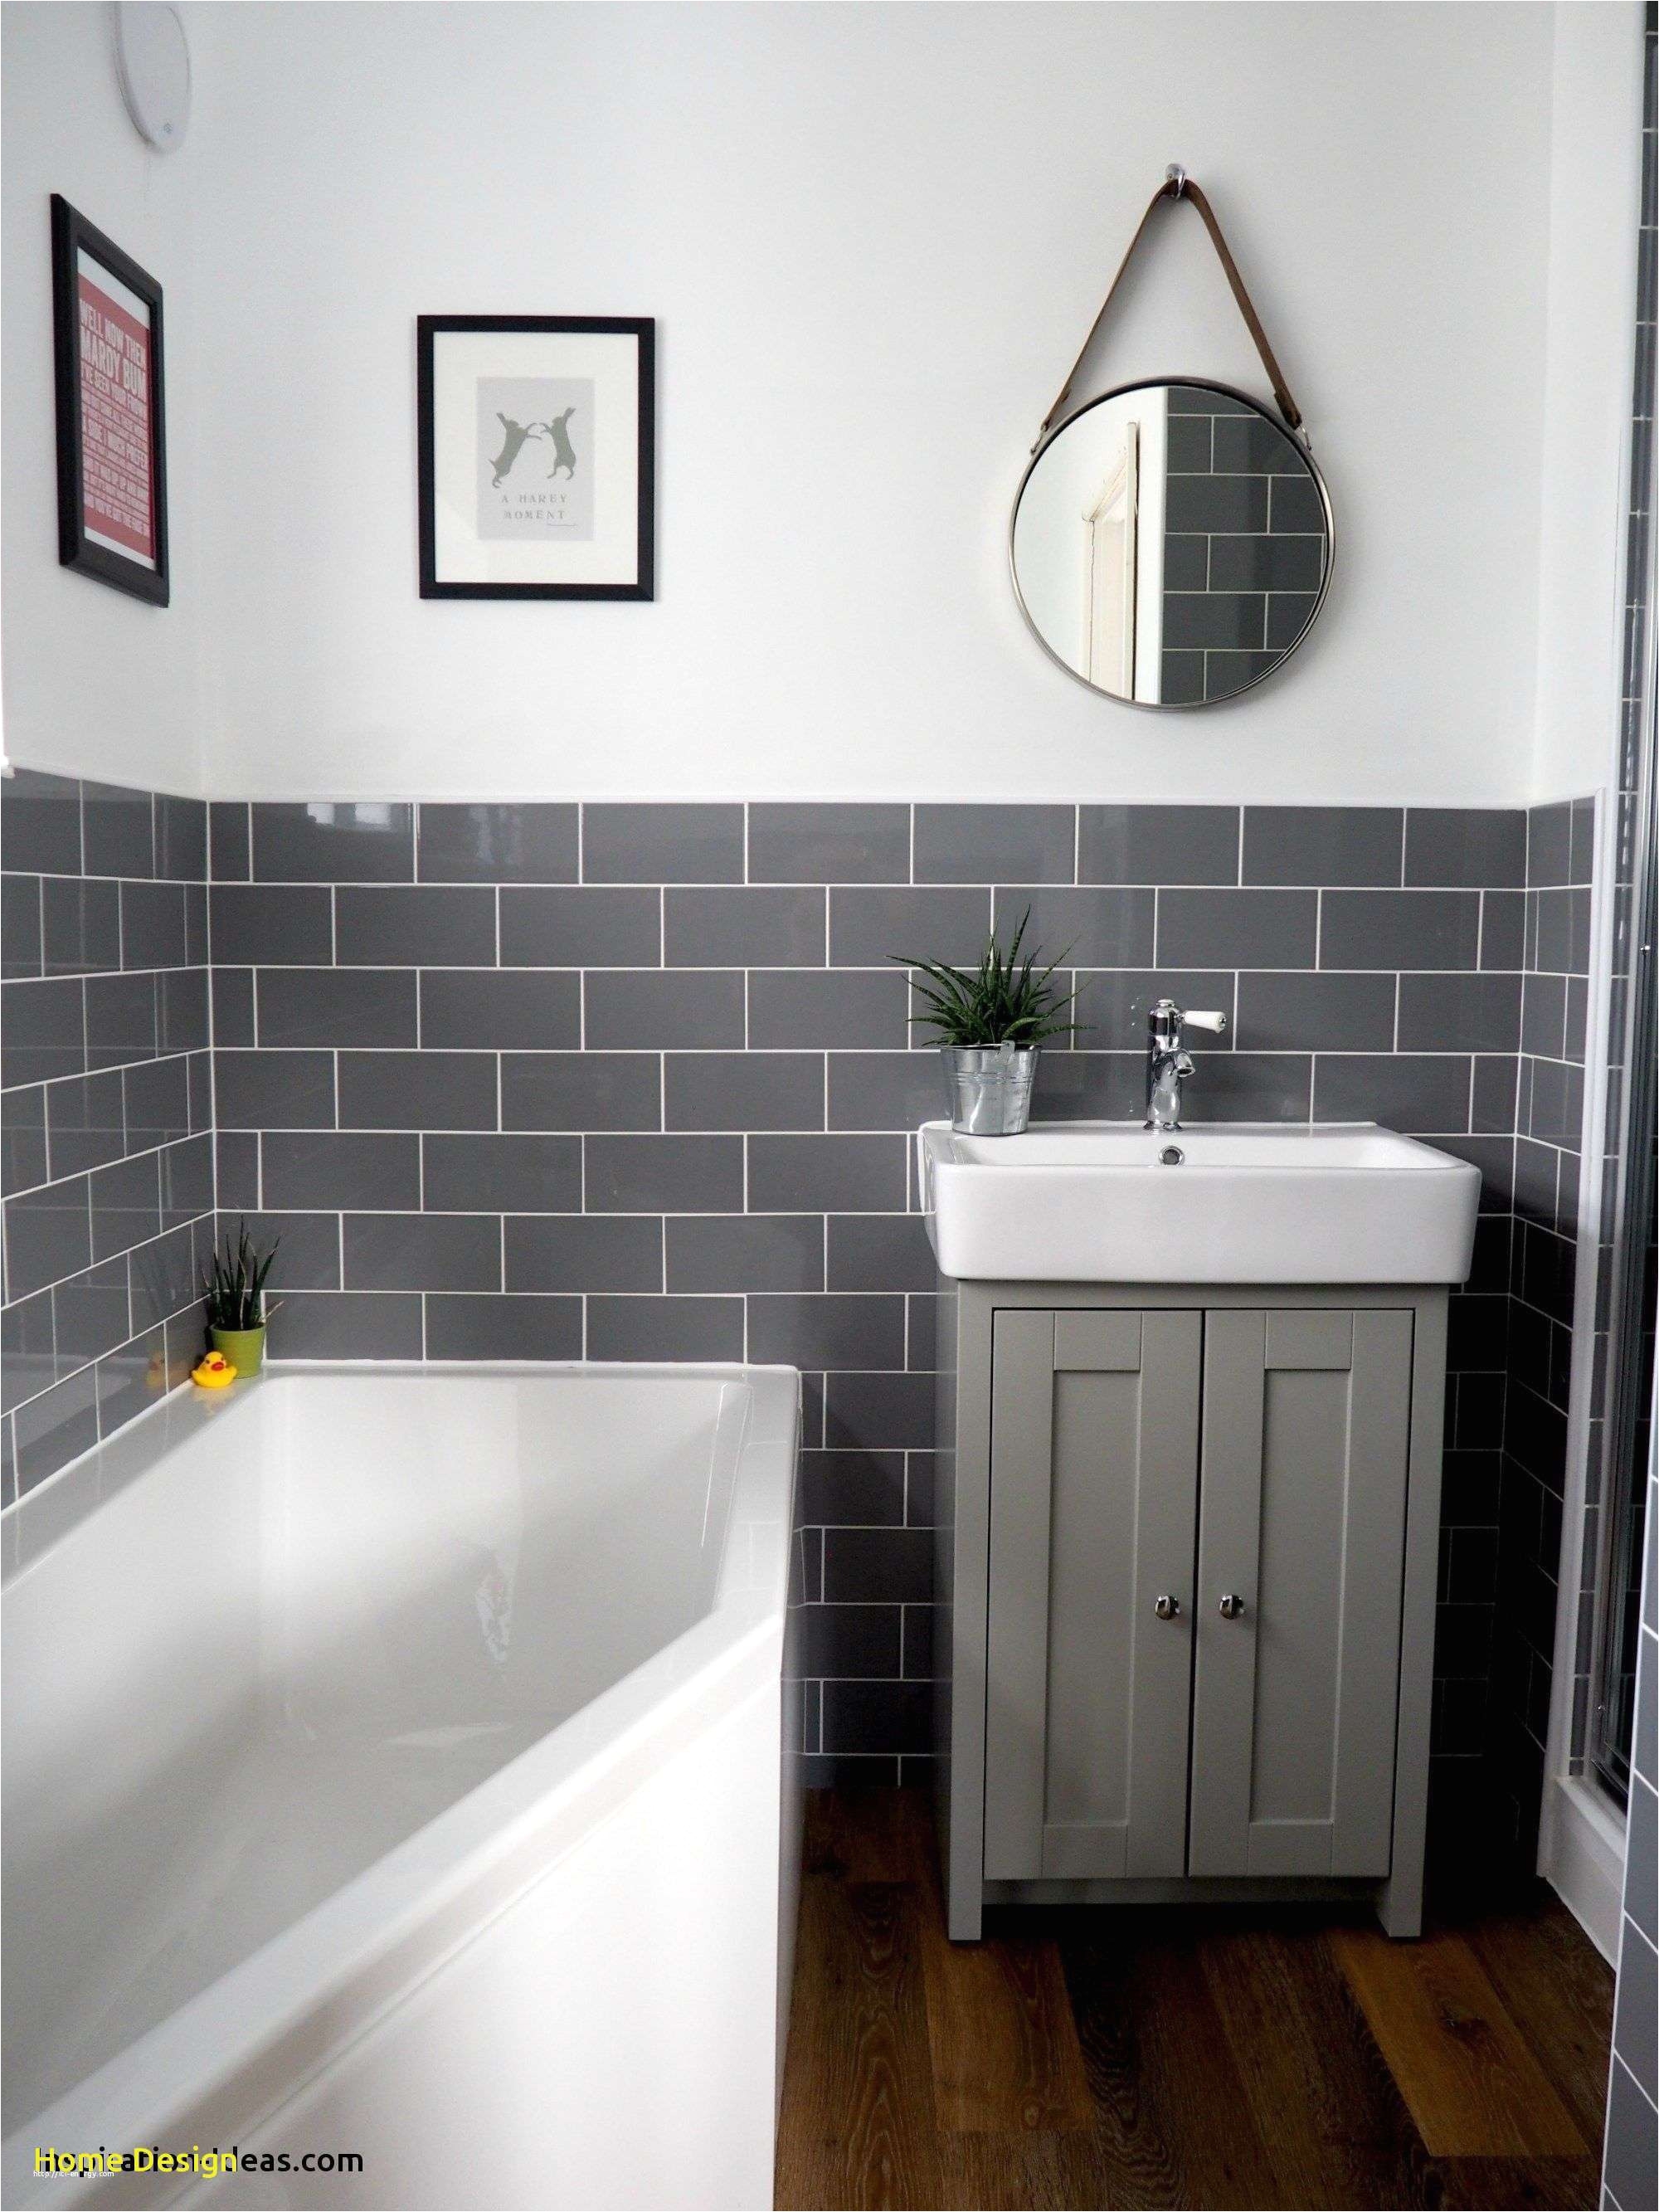 Tiled Bathroom Design Ideas Bathroom Designs Bathroom Tile Designs for Small Bathrooms Tile